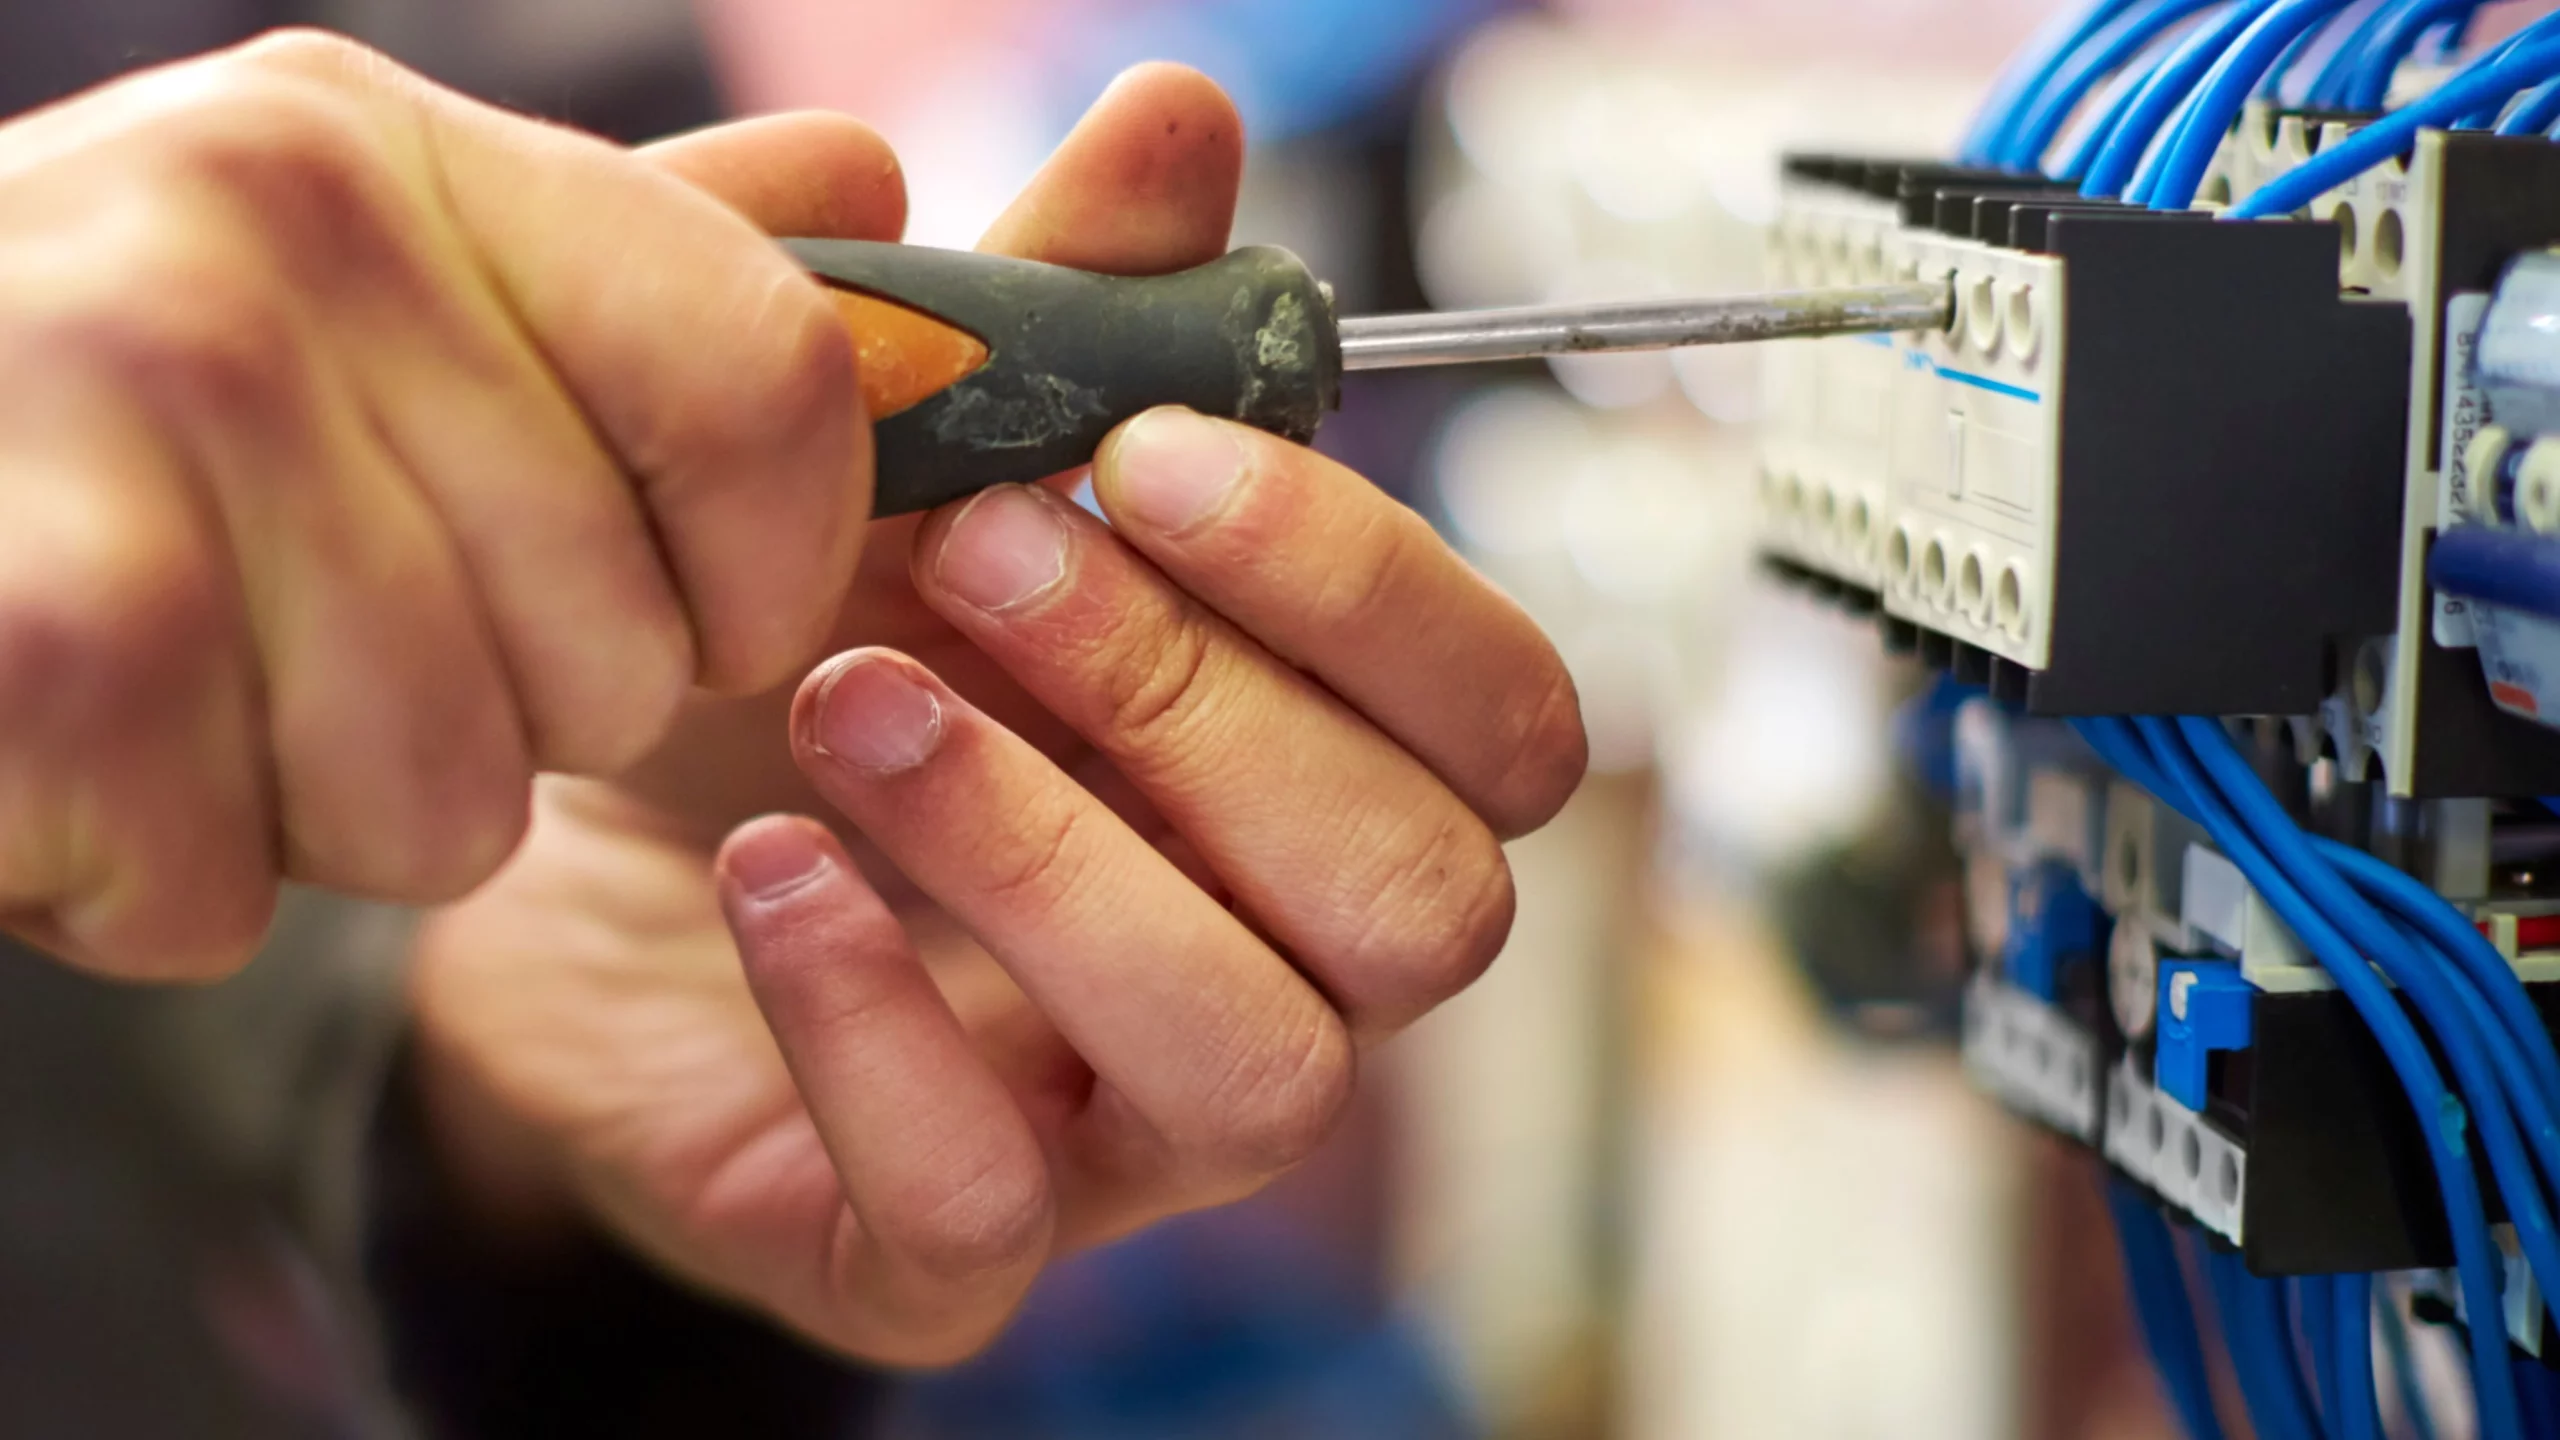 electricians' screwdrivers